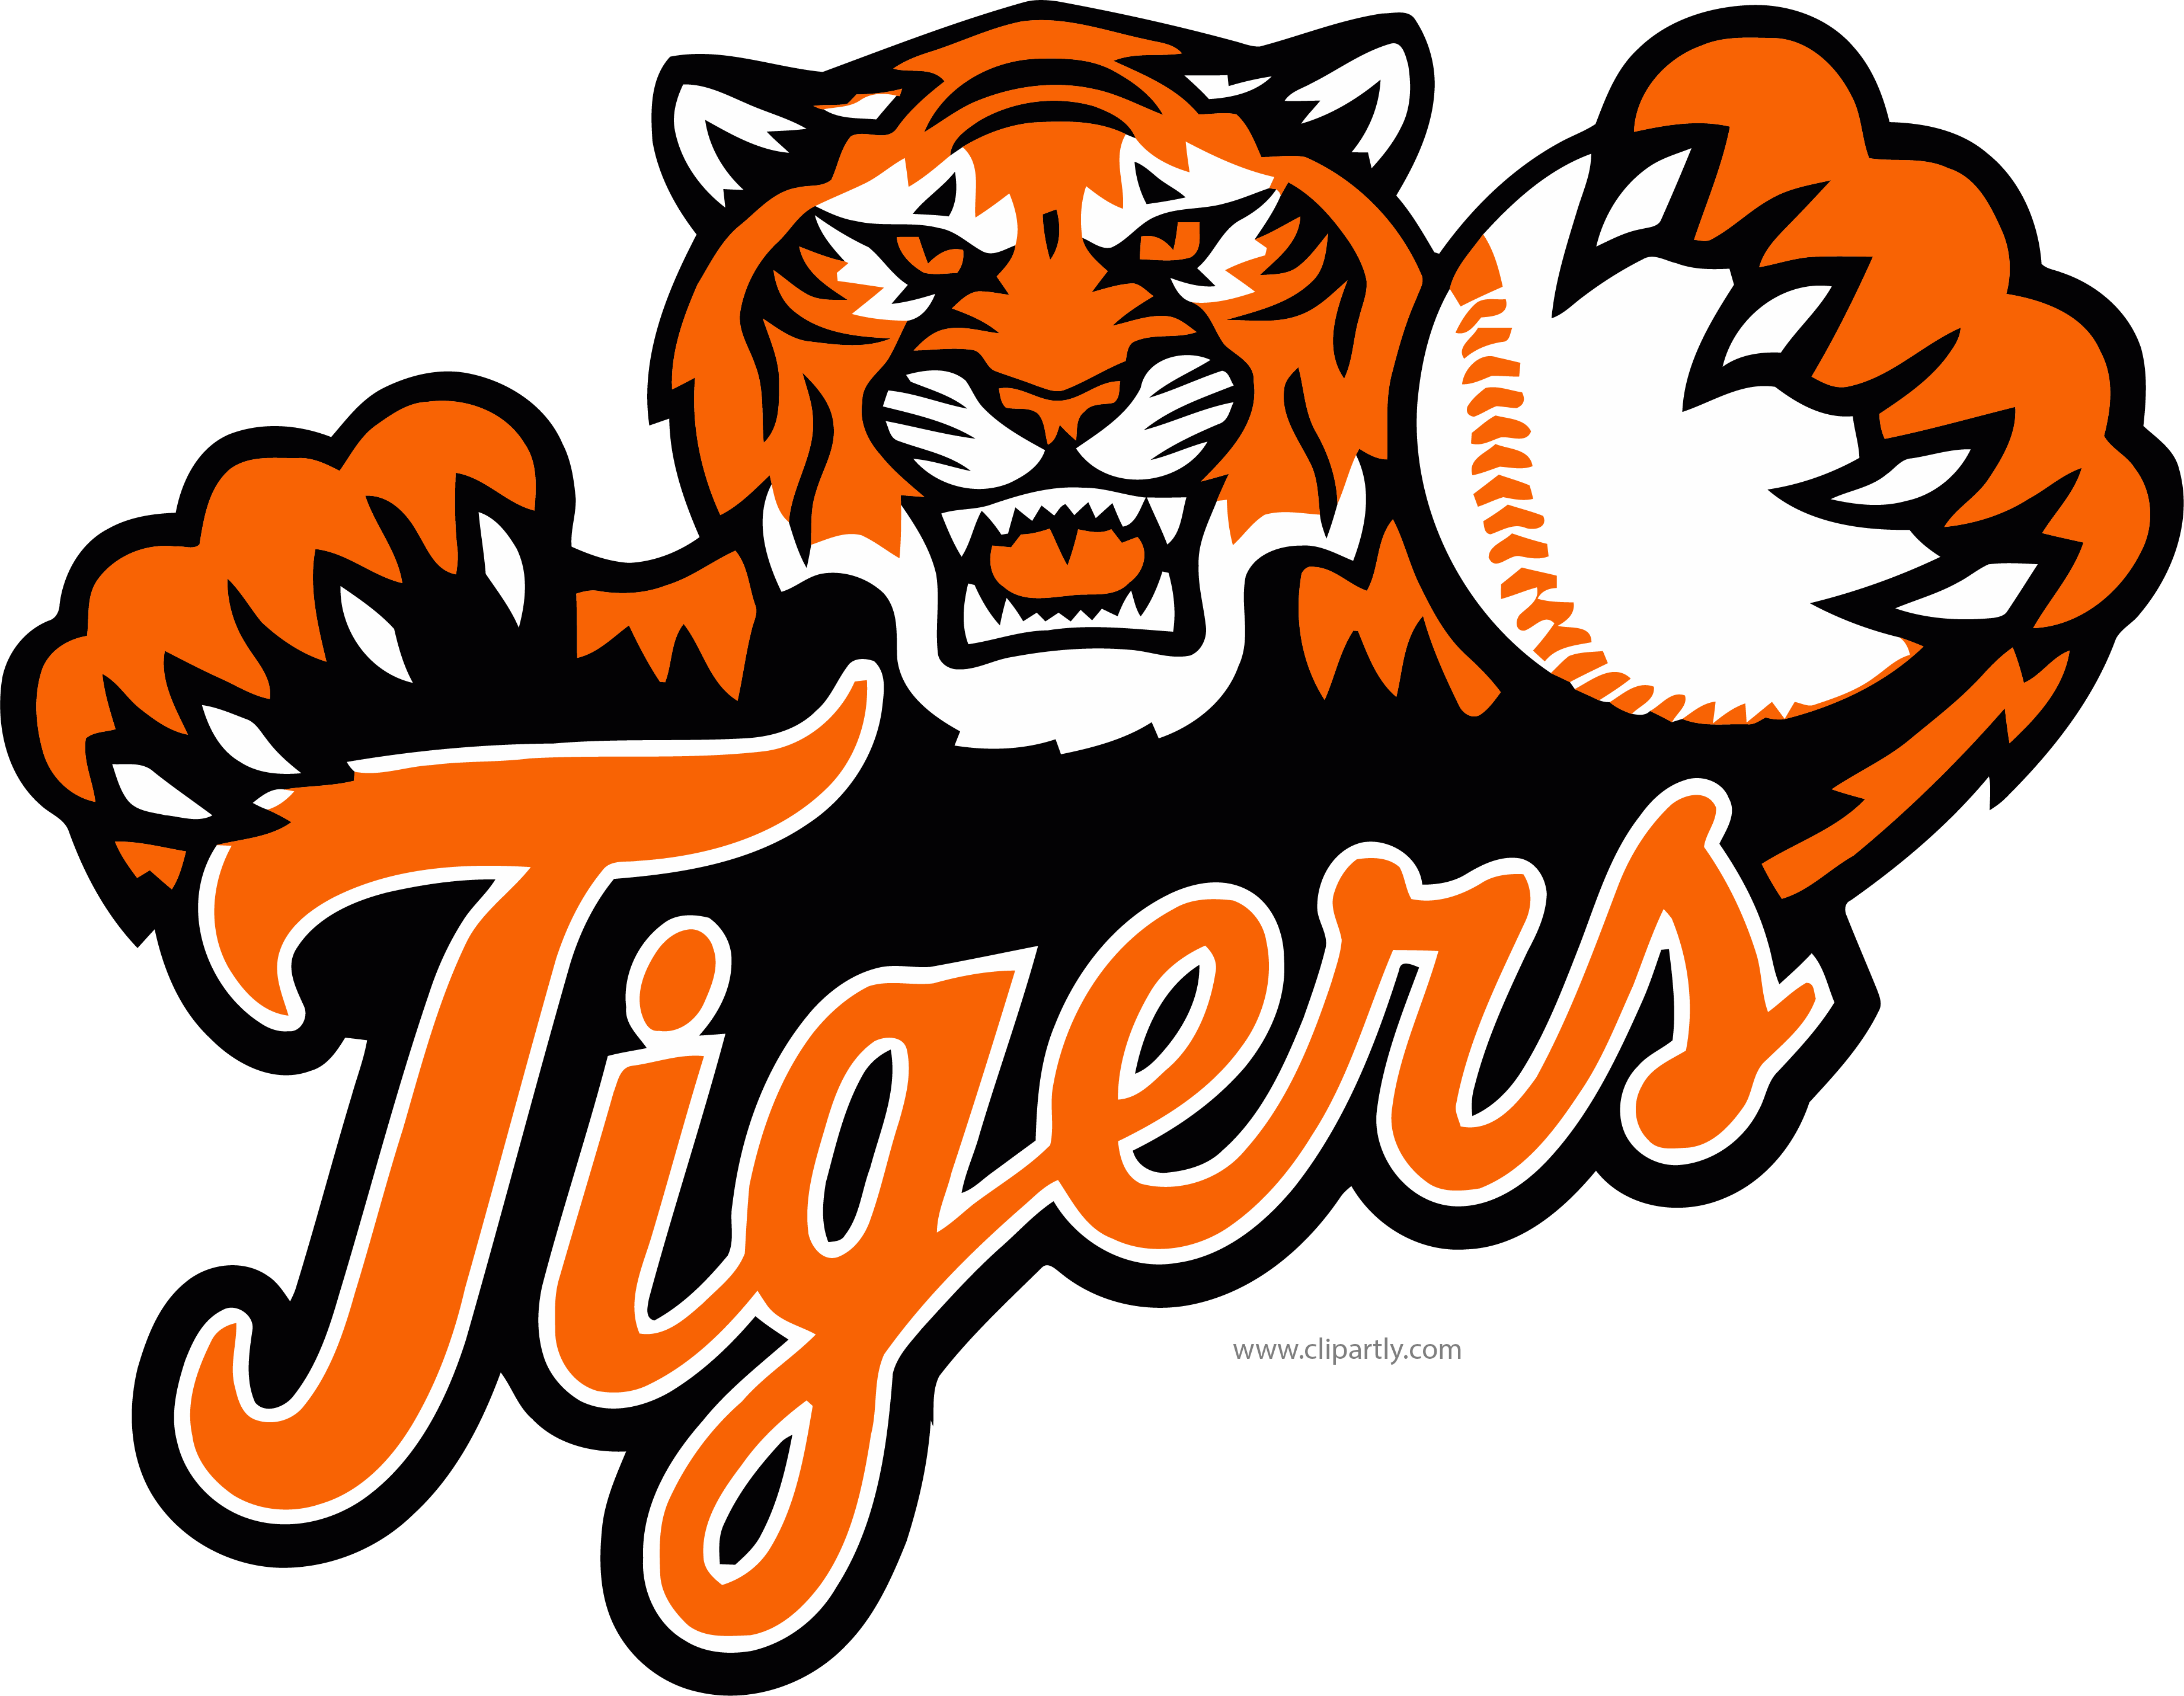 Download Baseball Robot Clipart Tigers Baseball Logo PNG Image with